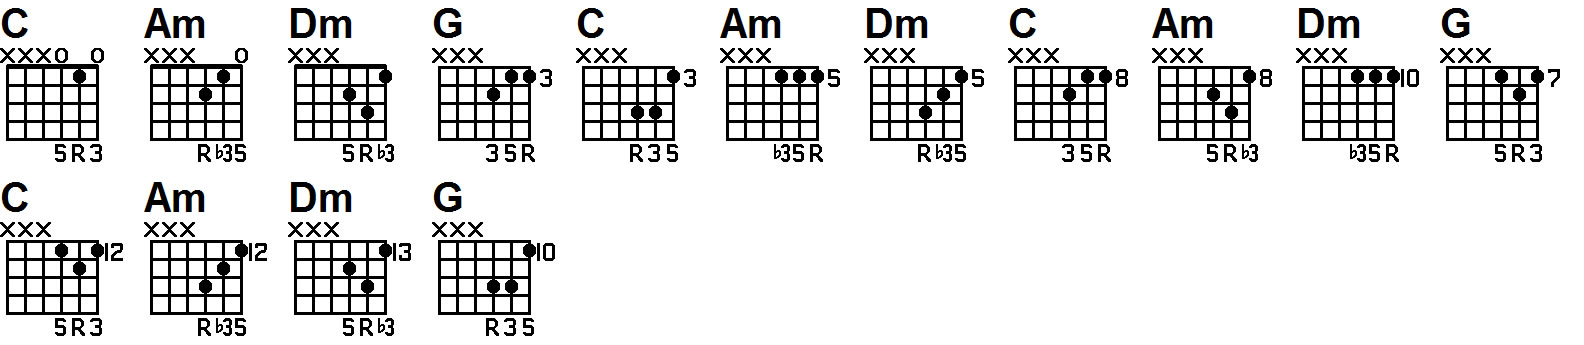 guitar lesson on triad 1625 chords